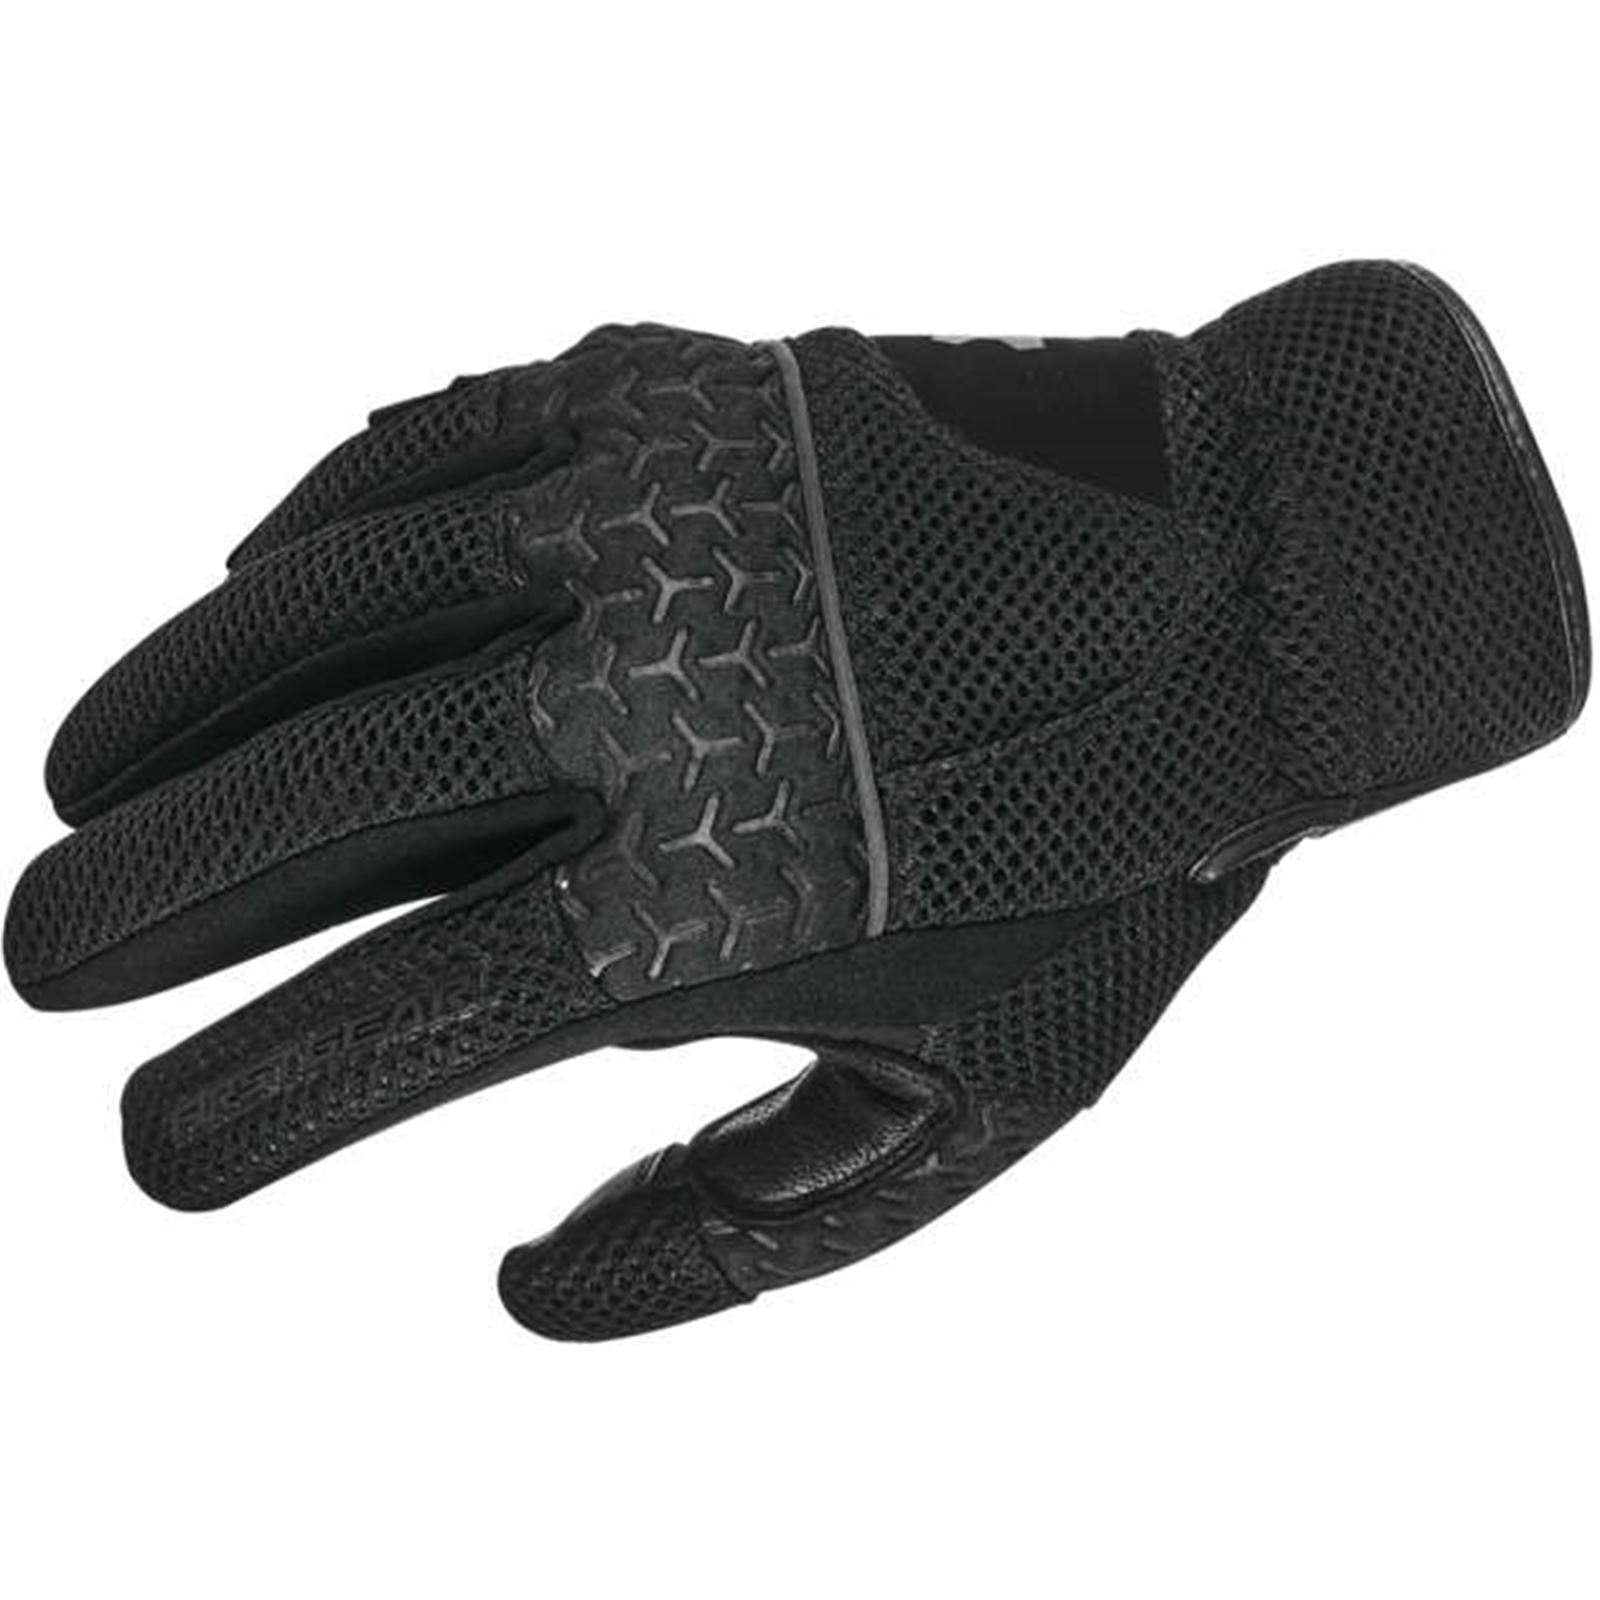 Firstgear Contour Air Gloves Black - Women's Medium